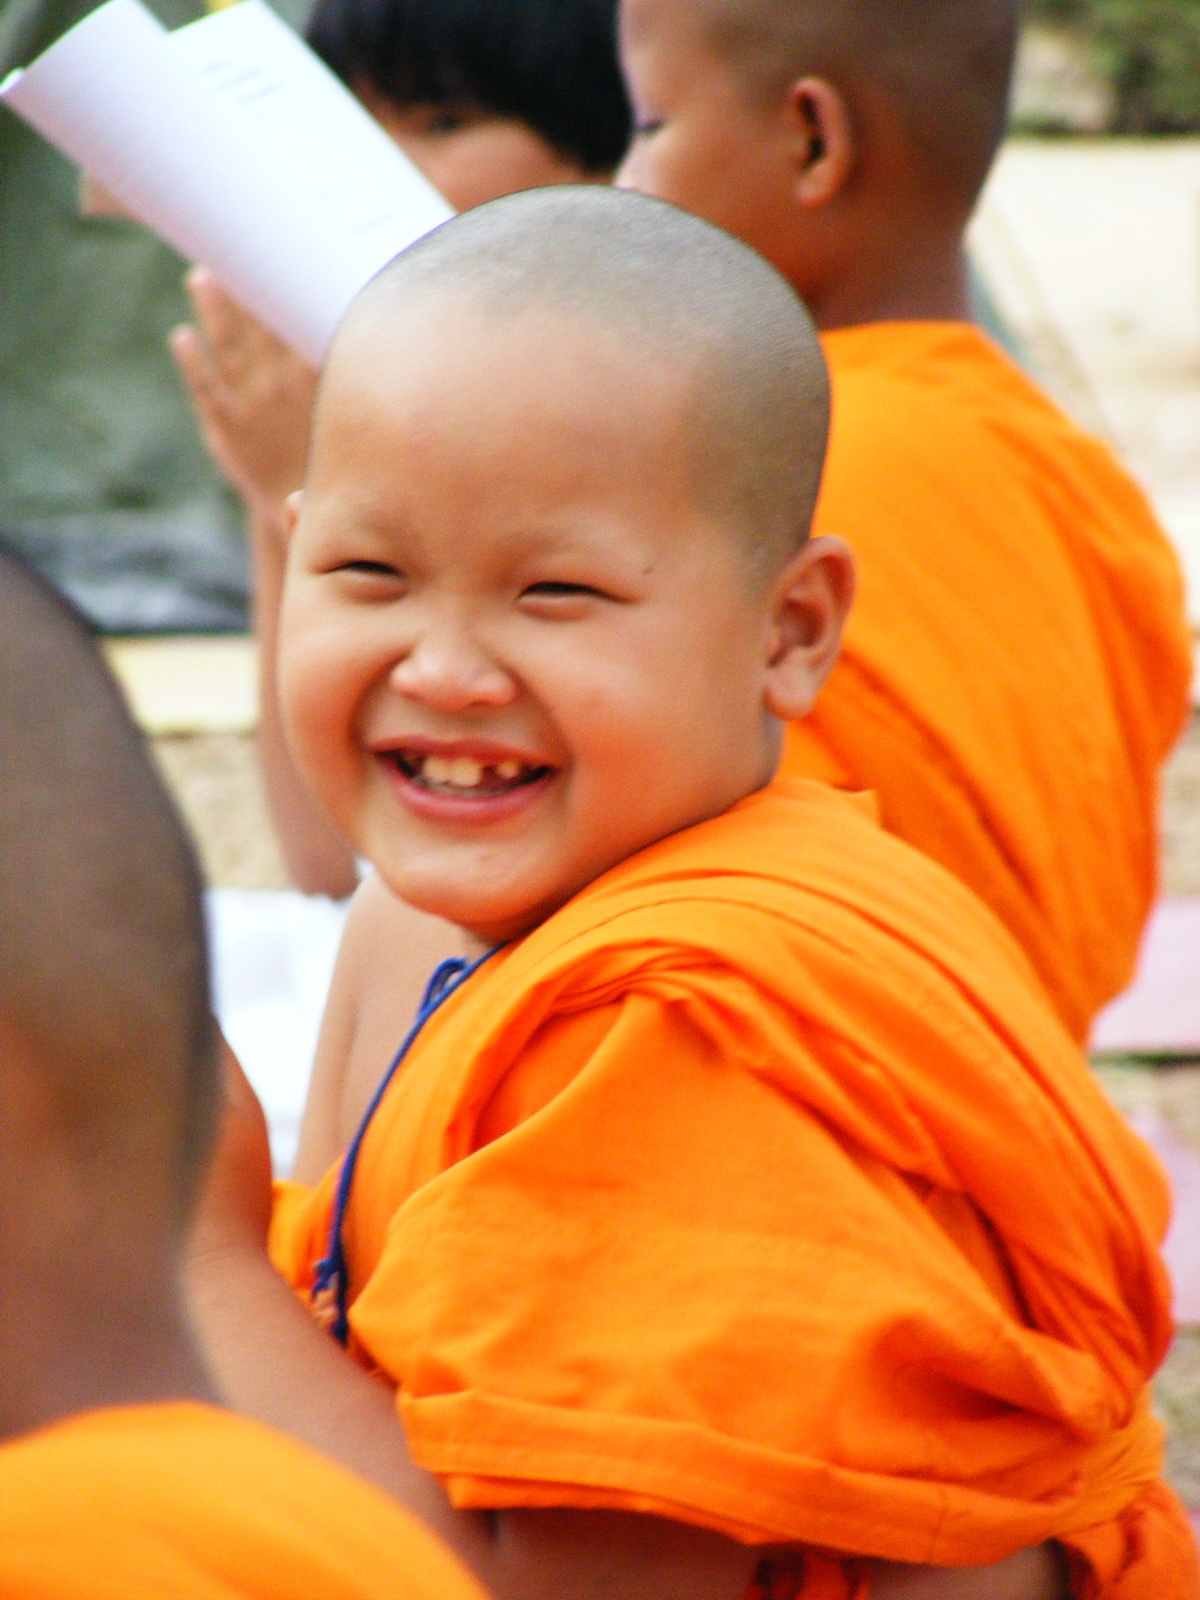 File:Thai buddhist monk smile.jpg - Wikimedia Commons